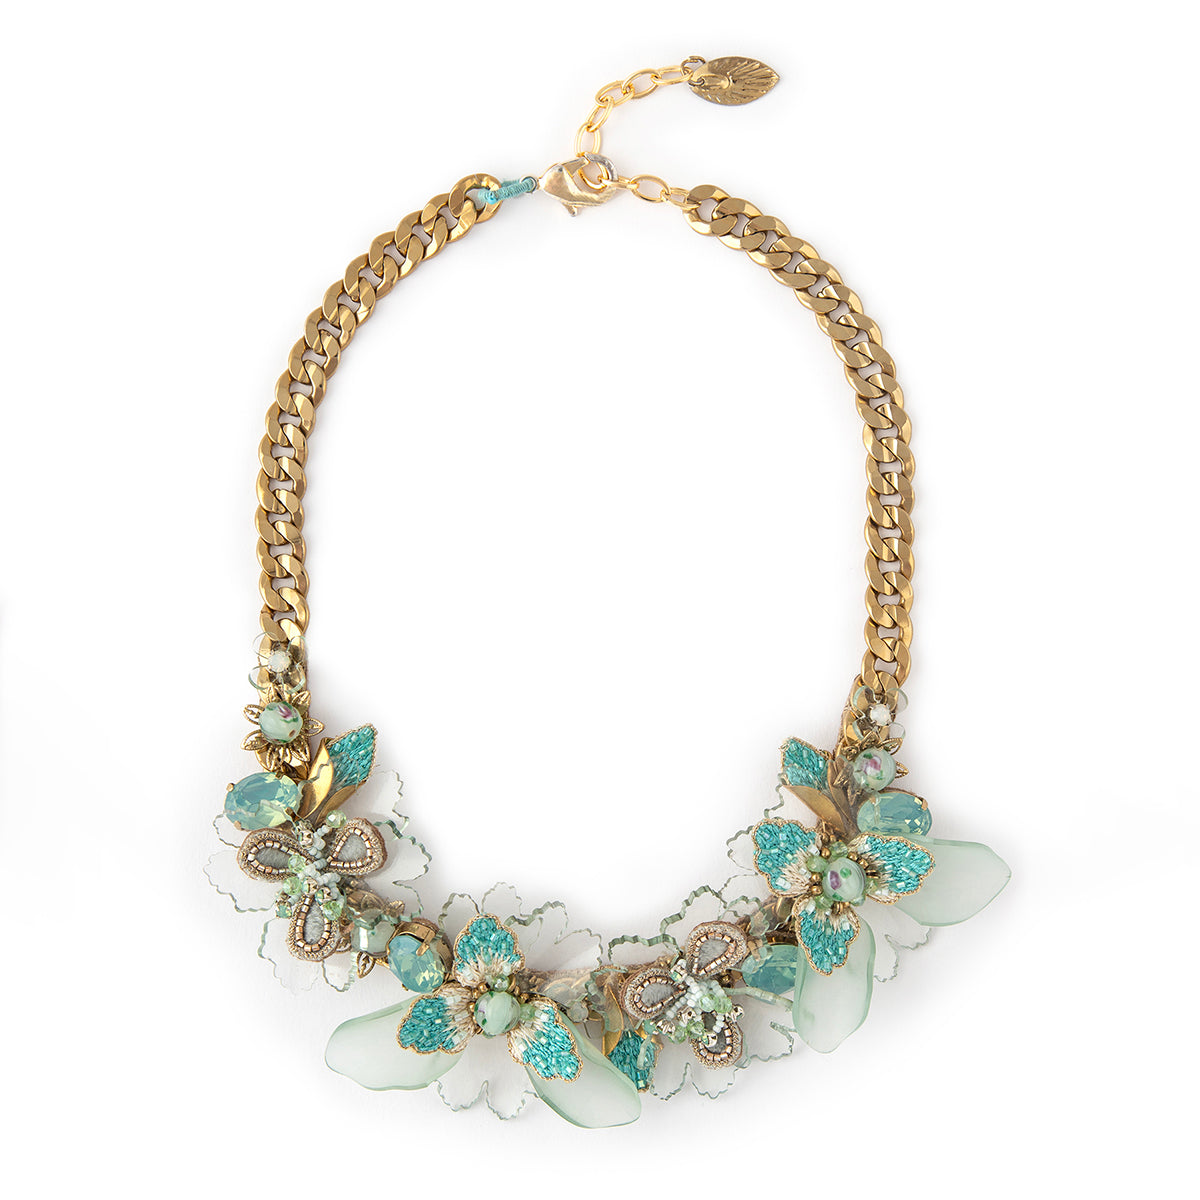 Deepa by Deepa Gurnani Handmade Calypso necklace in fuchsia color